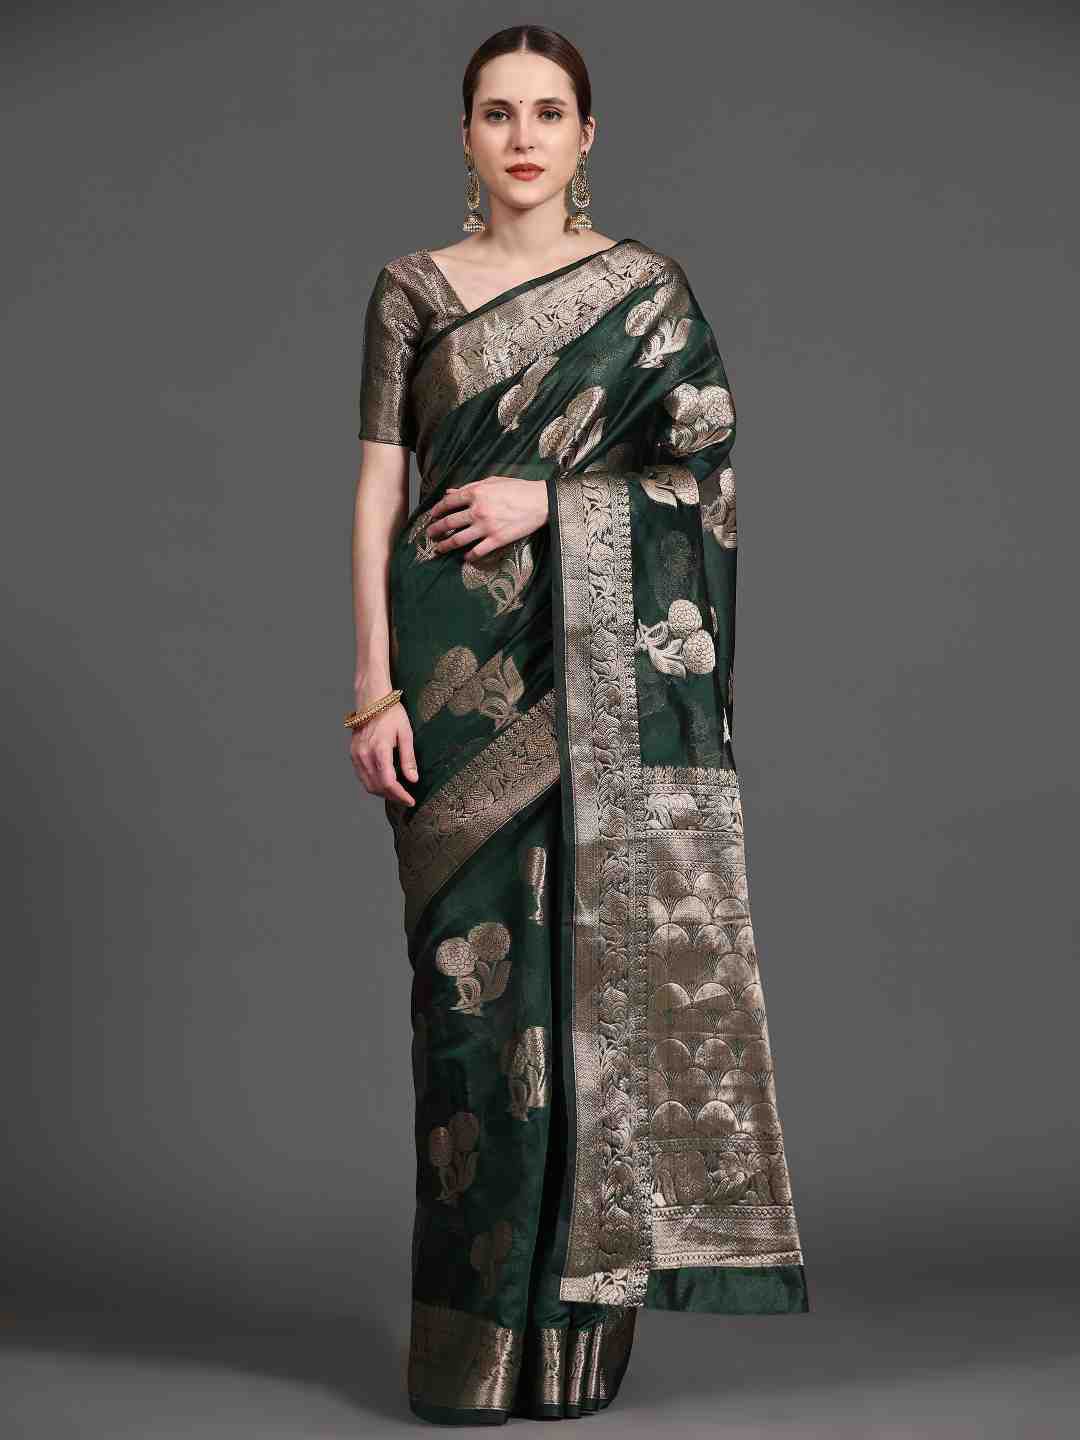 JUST FASHION Woven Design Zari Banarasi Saree Price in India